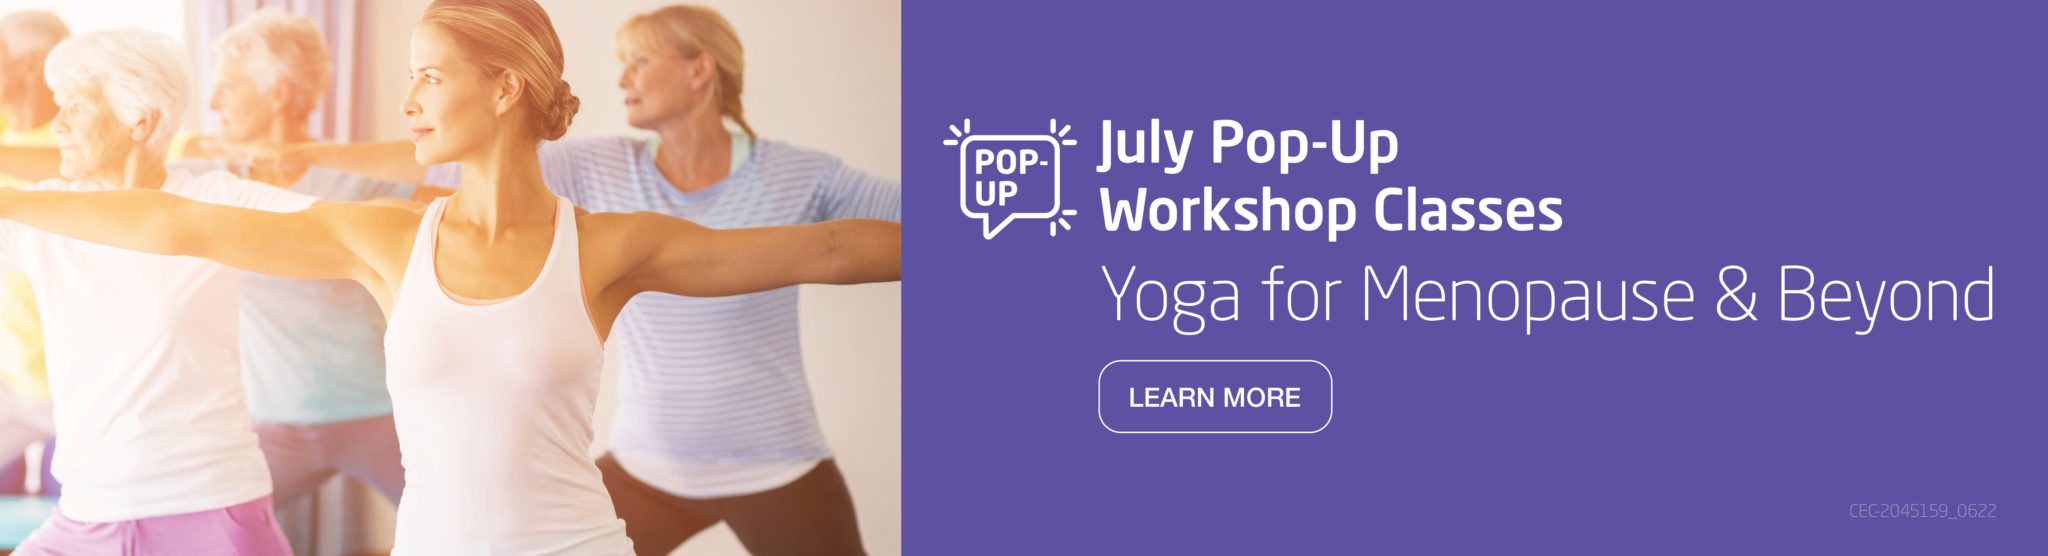 JULY POP UP Workshop Classes Yoga for Menopause & Beyond